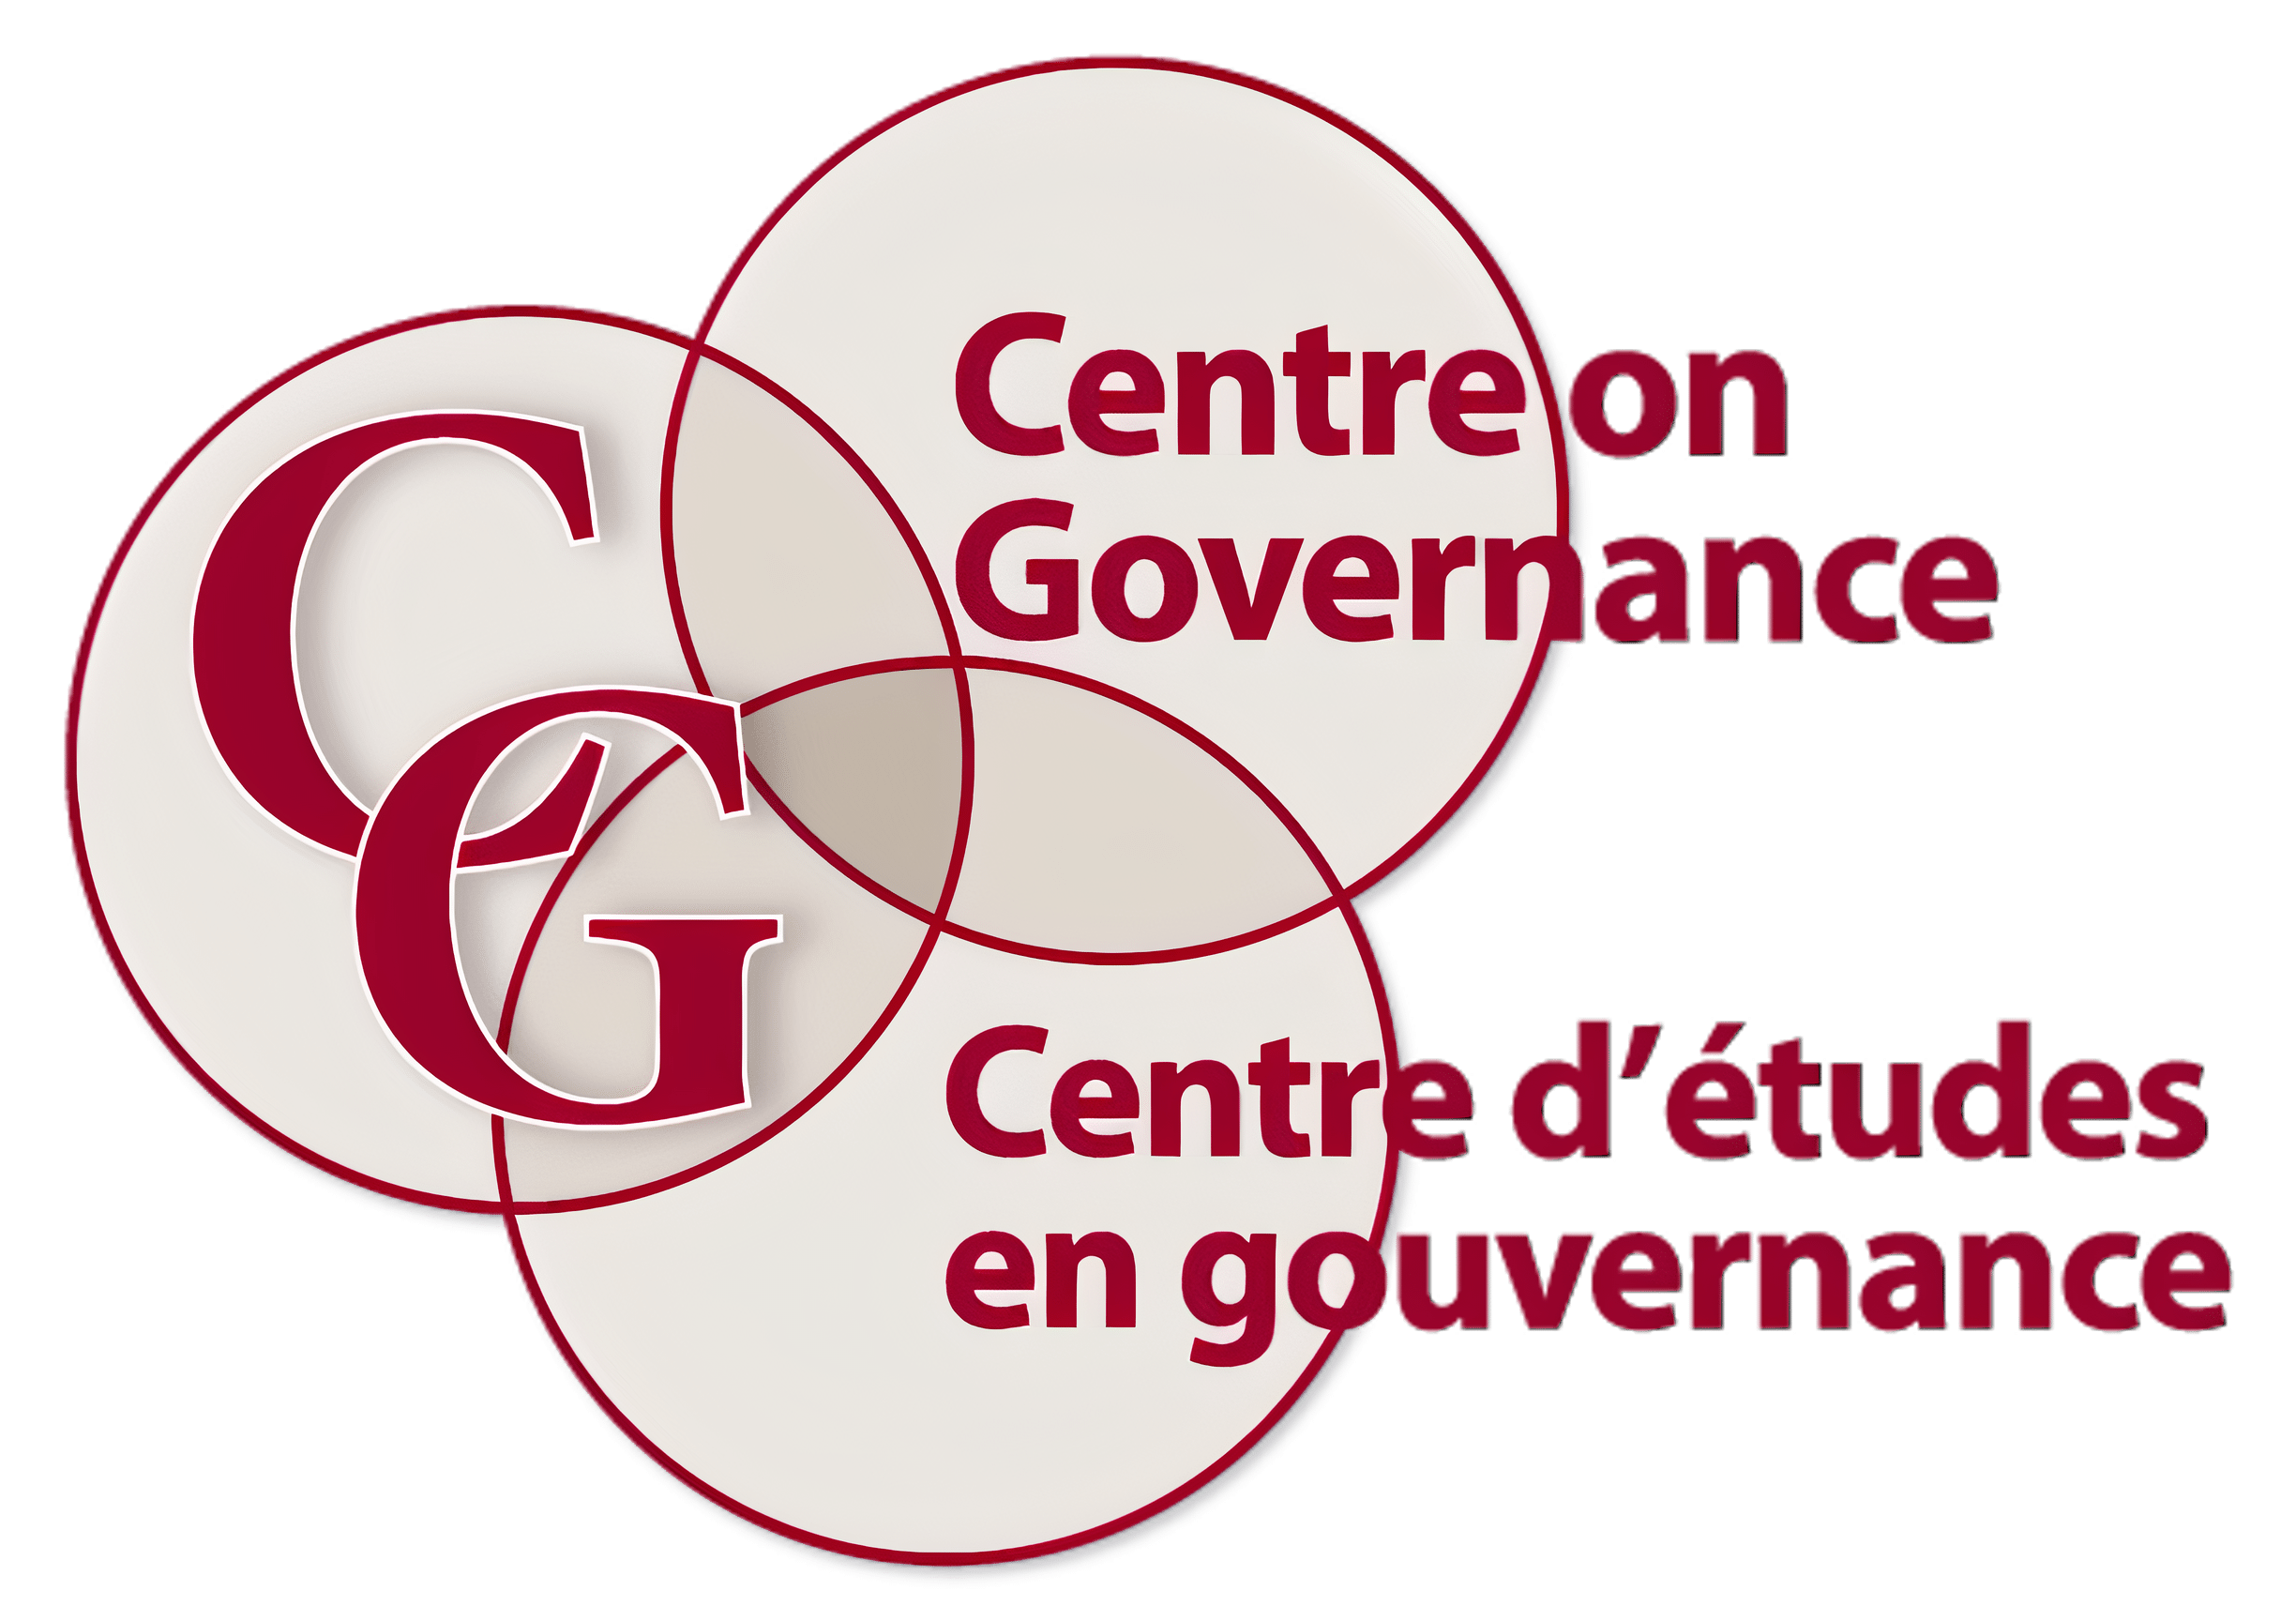 Centre on governance logo